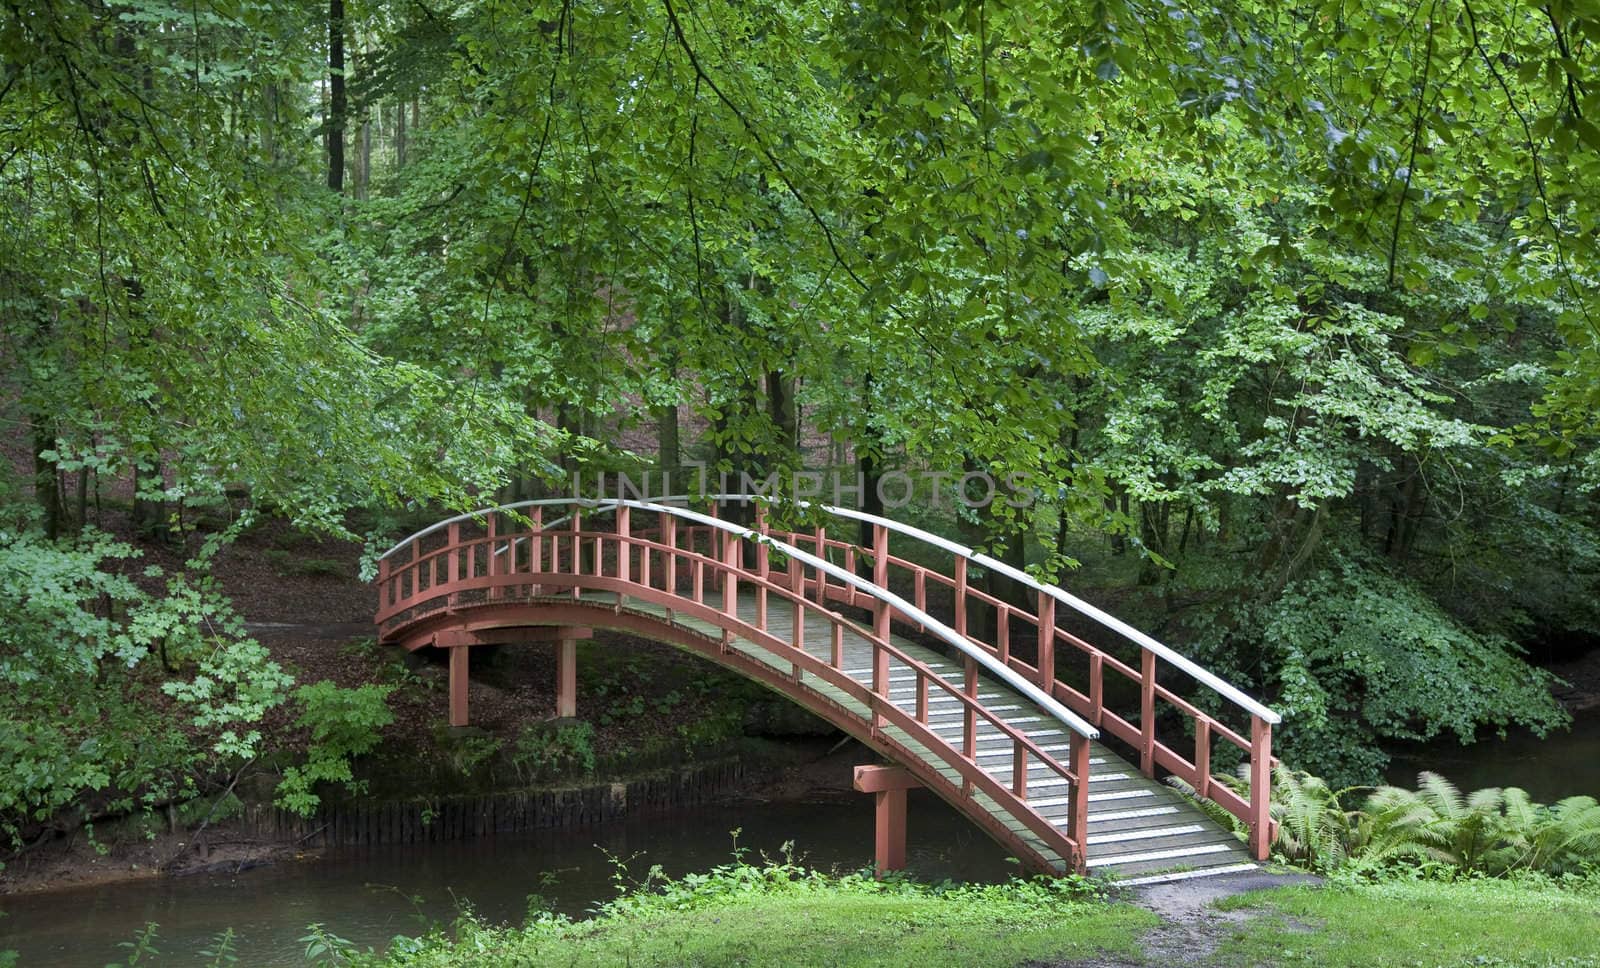 Footbridge in the park by ABCDK